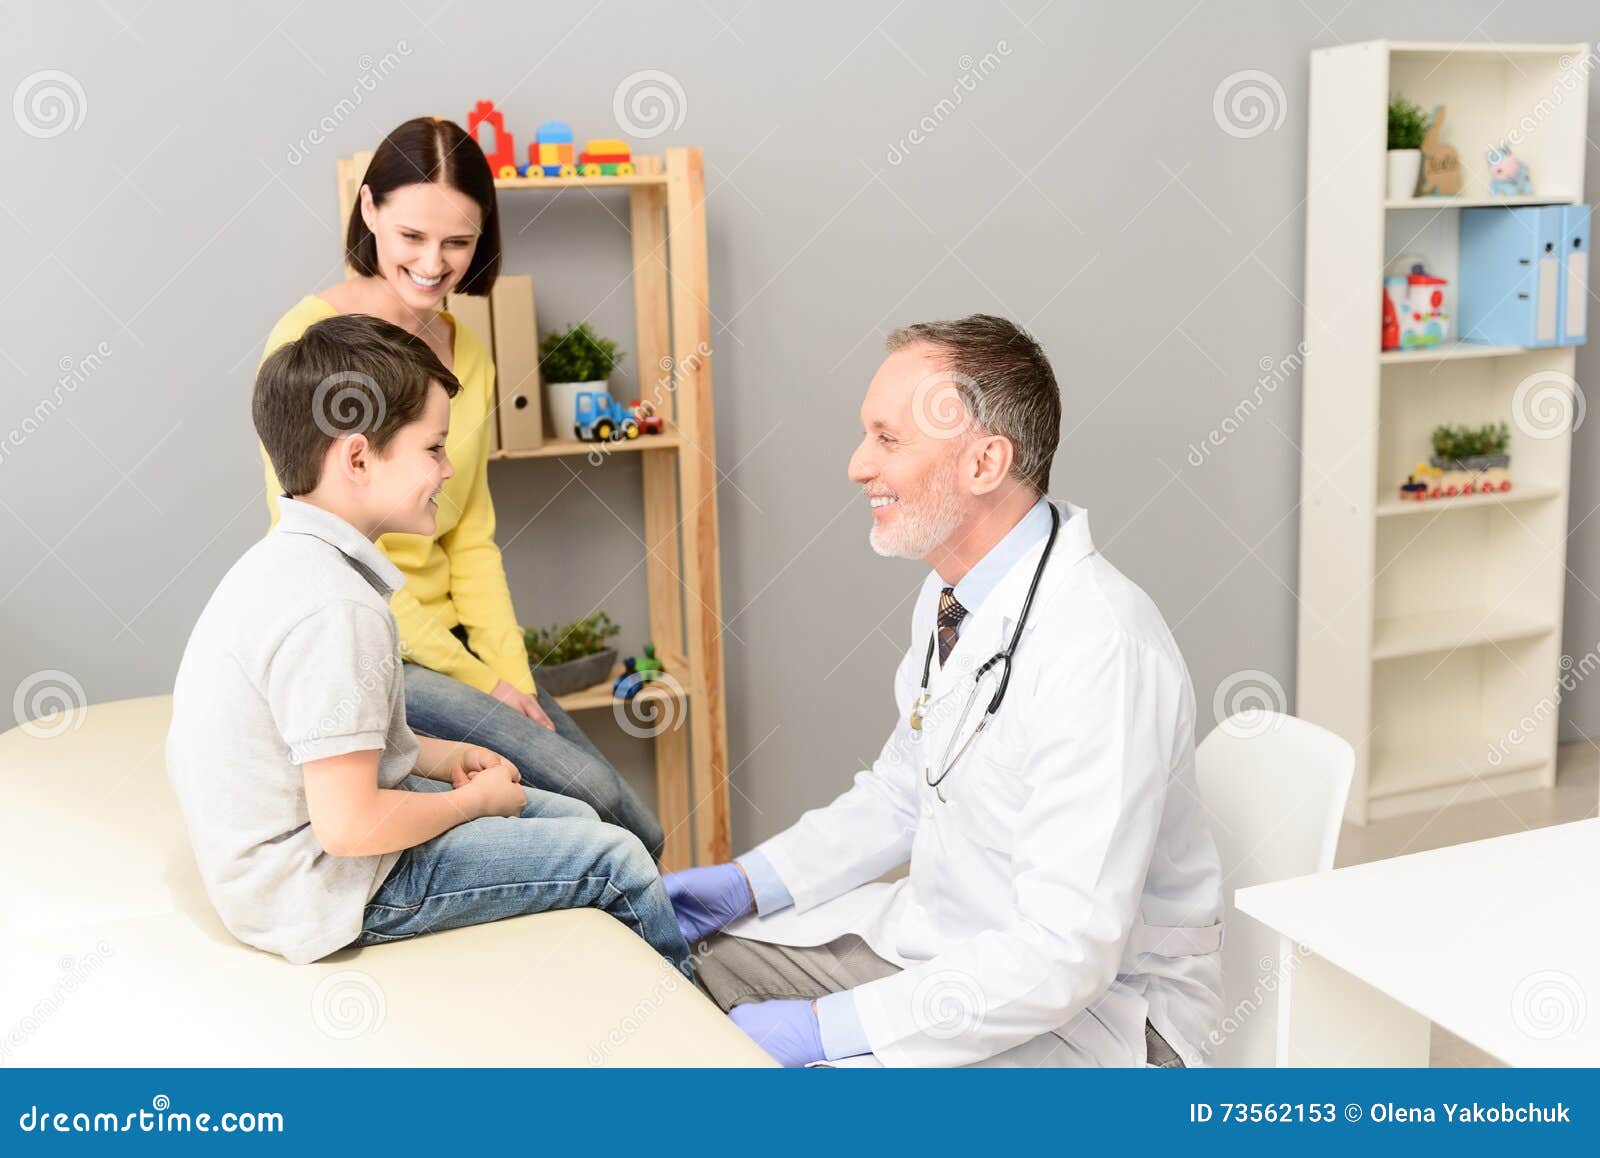 pediatrician doctor examining child